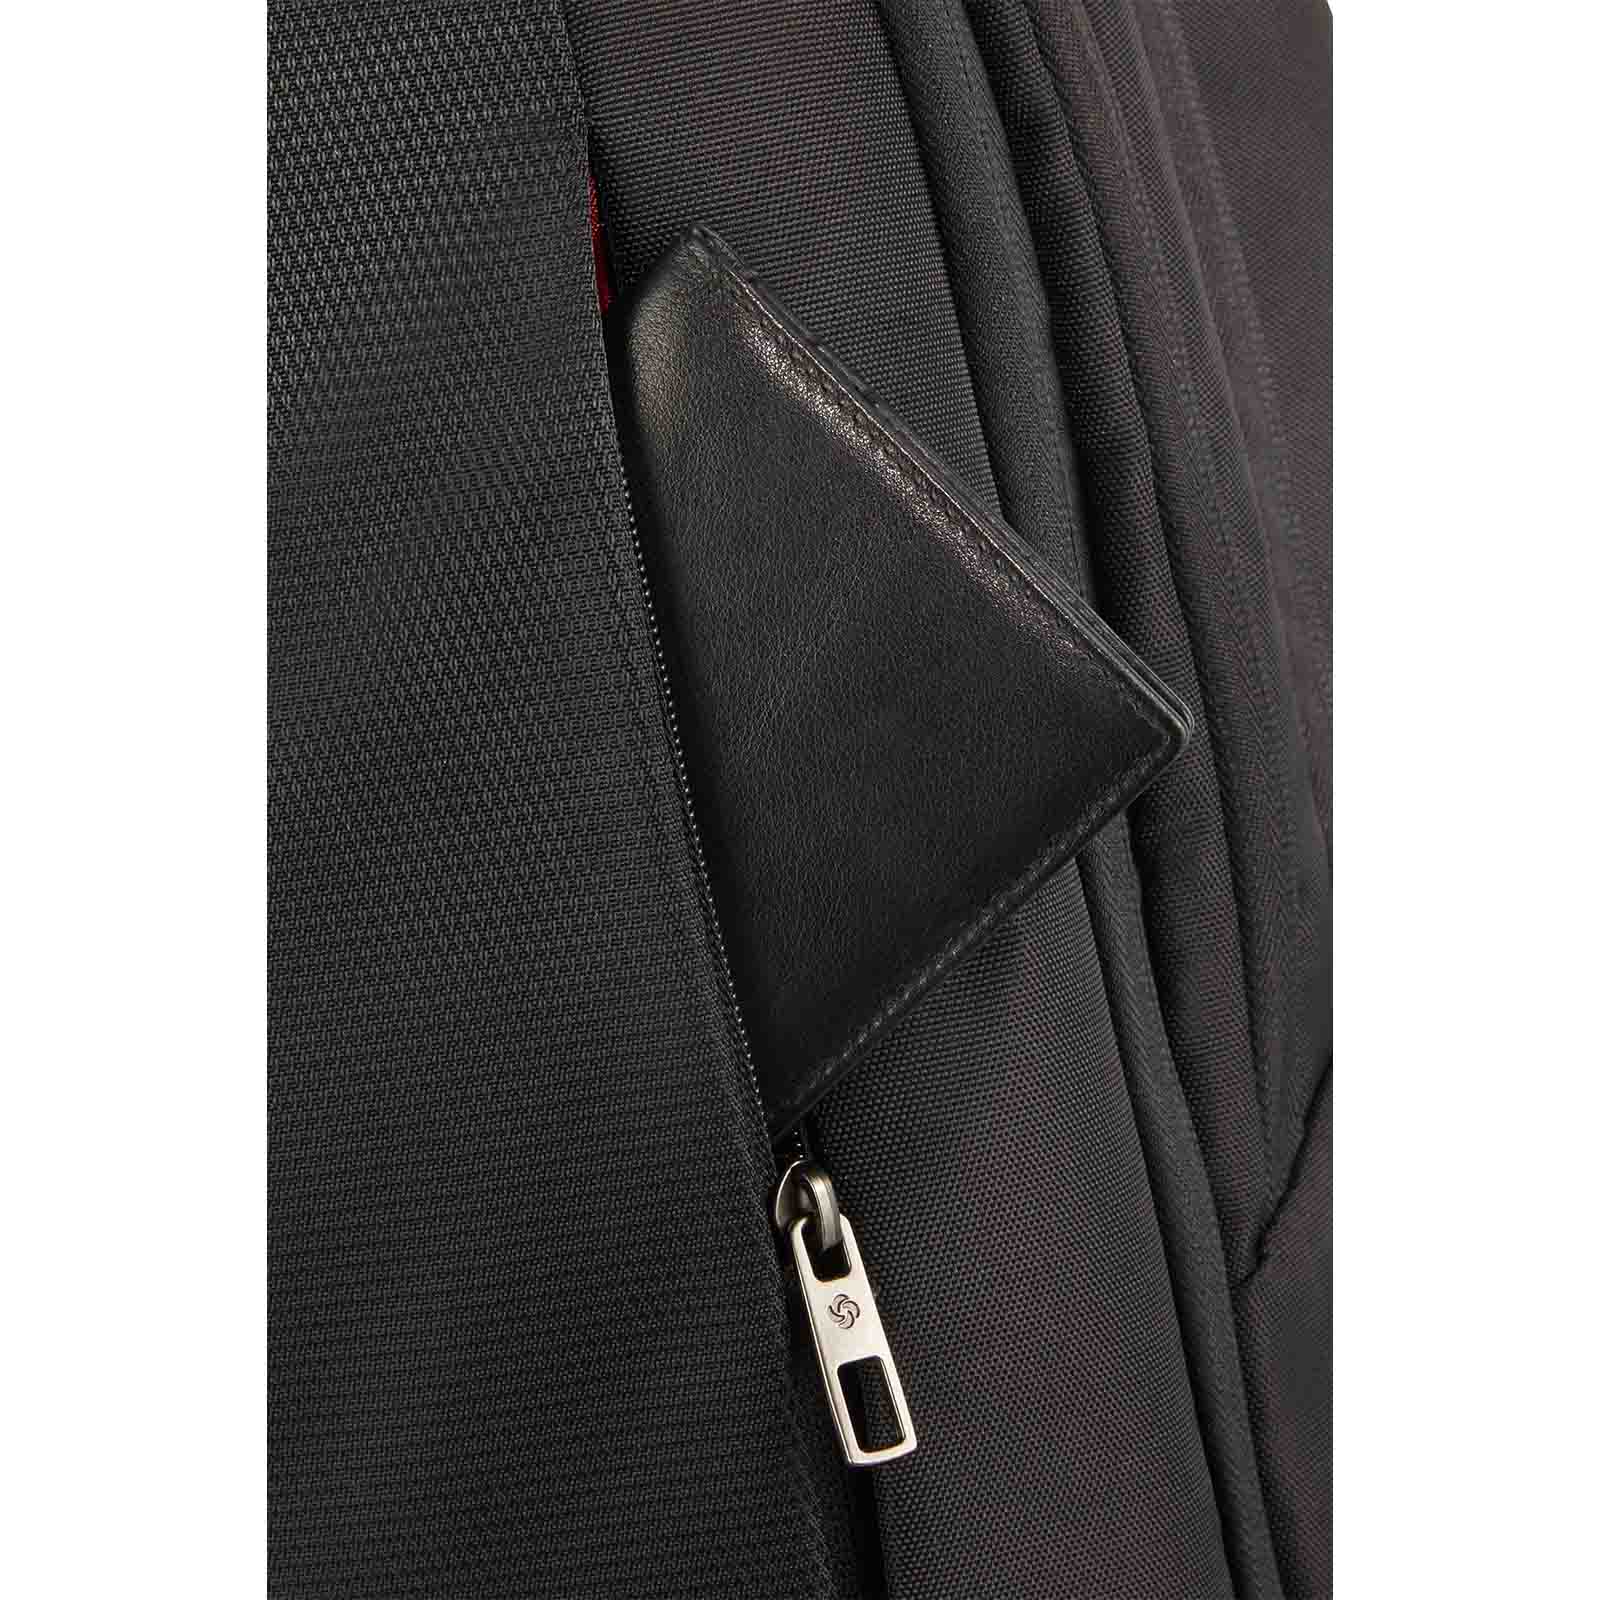 Samsonite-Guardit-2-17-Inch-Wheeled-Laptop-Backpack-Pocket